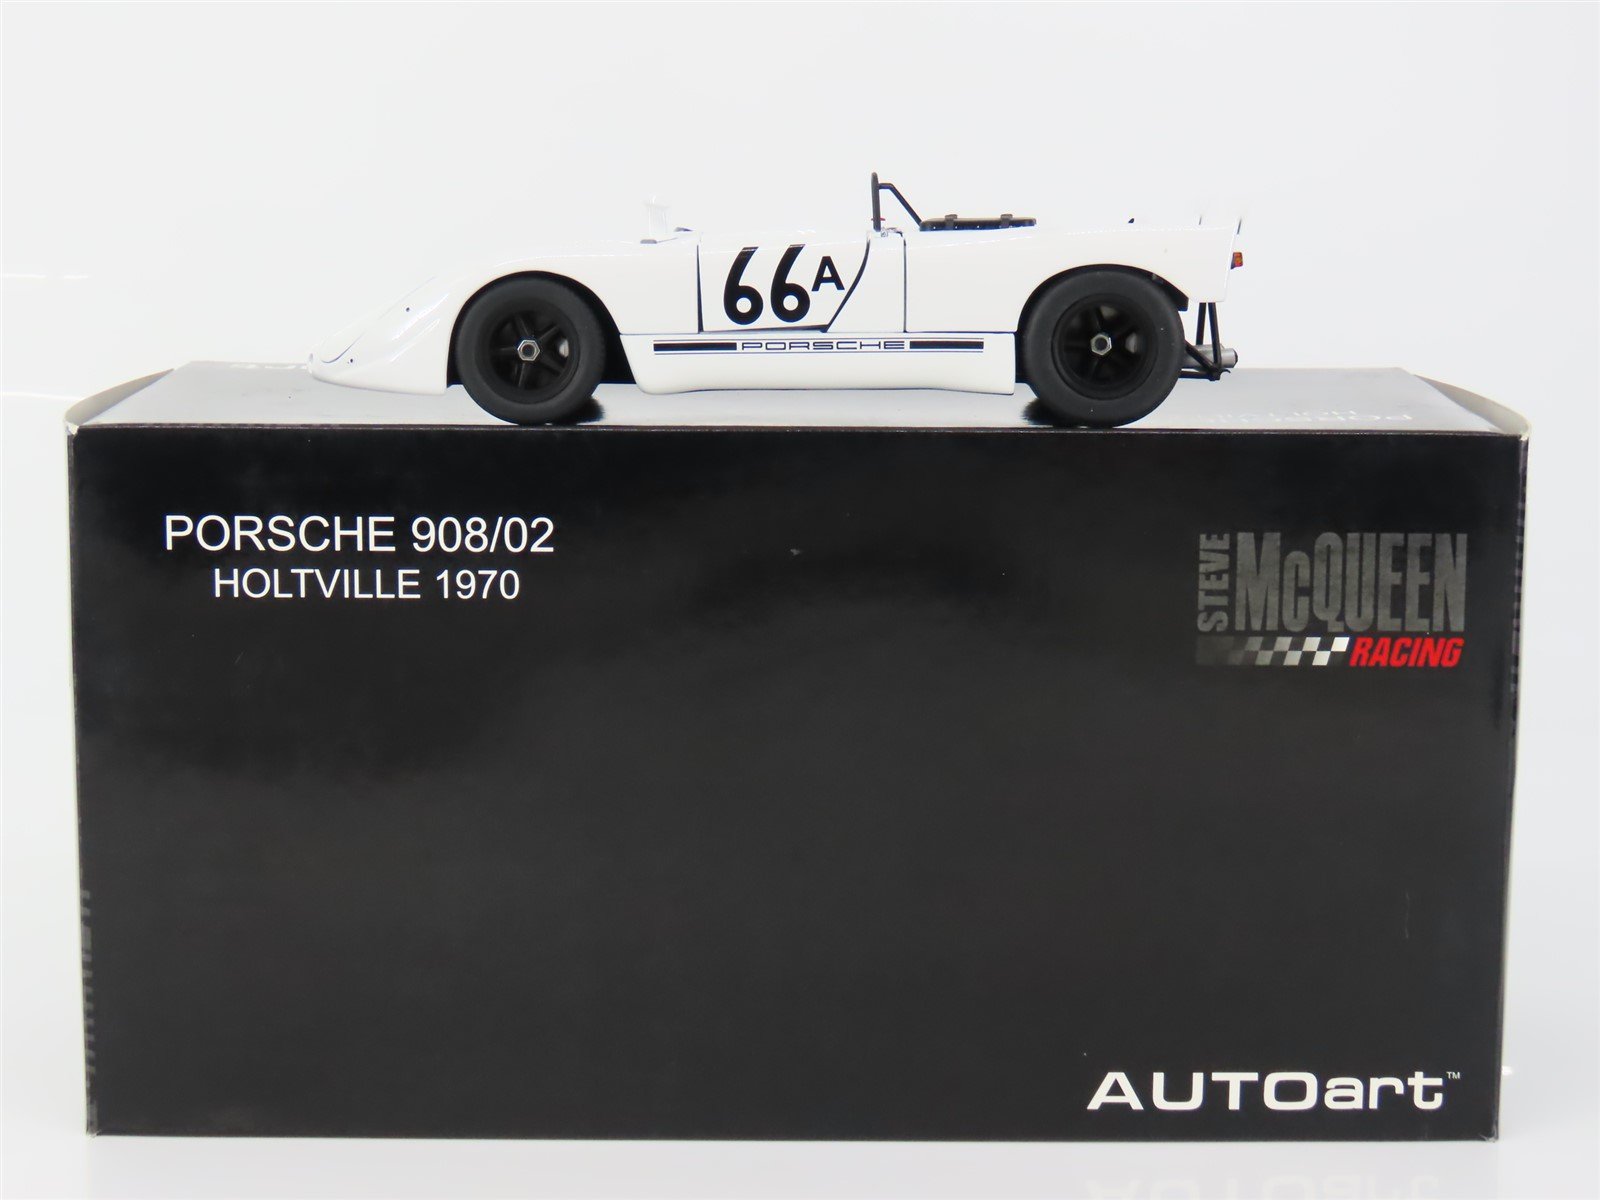 1:18 Scale AUTOart Steve Mcqueen Racing Die-Cast 1970 Porsche Holtville 908/02